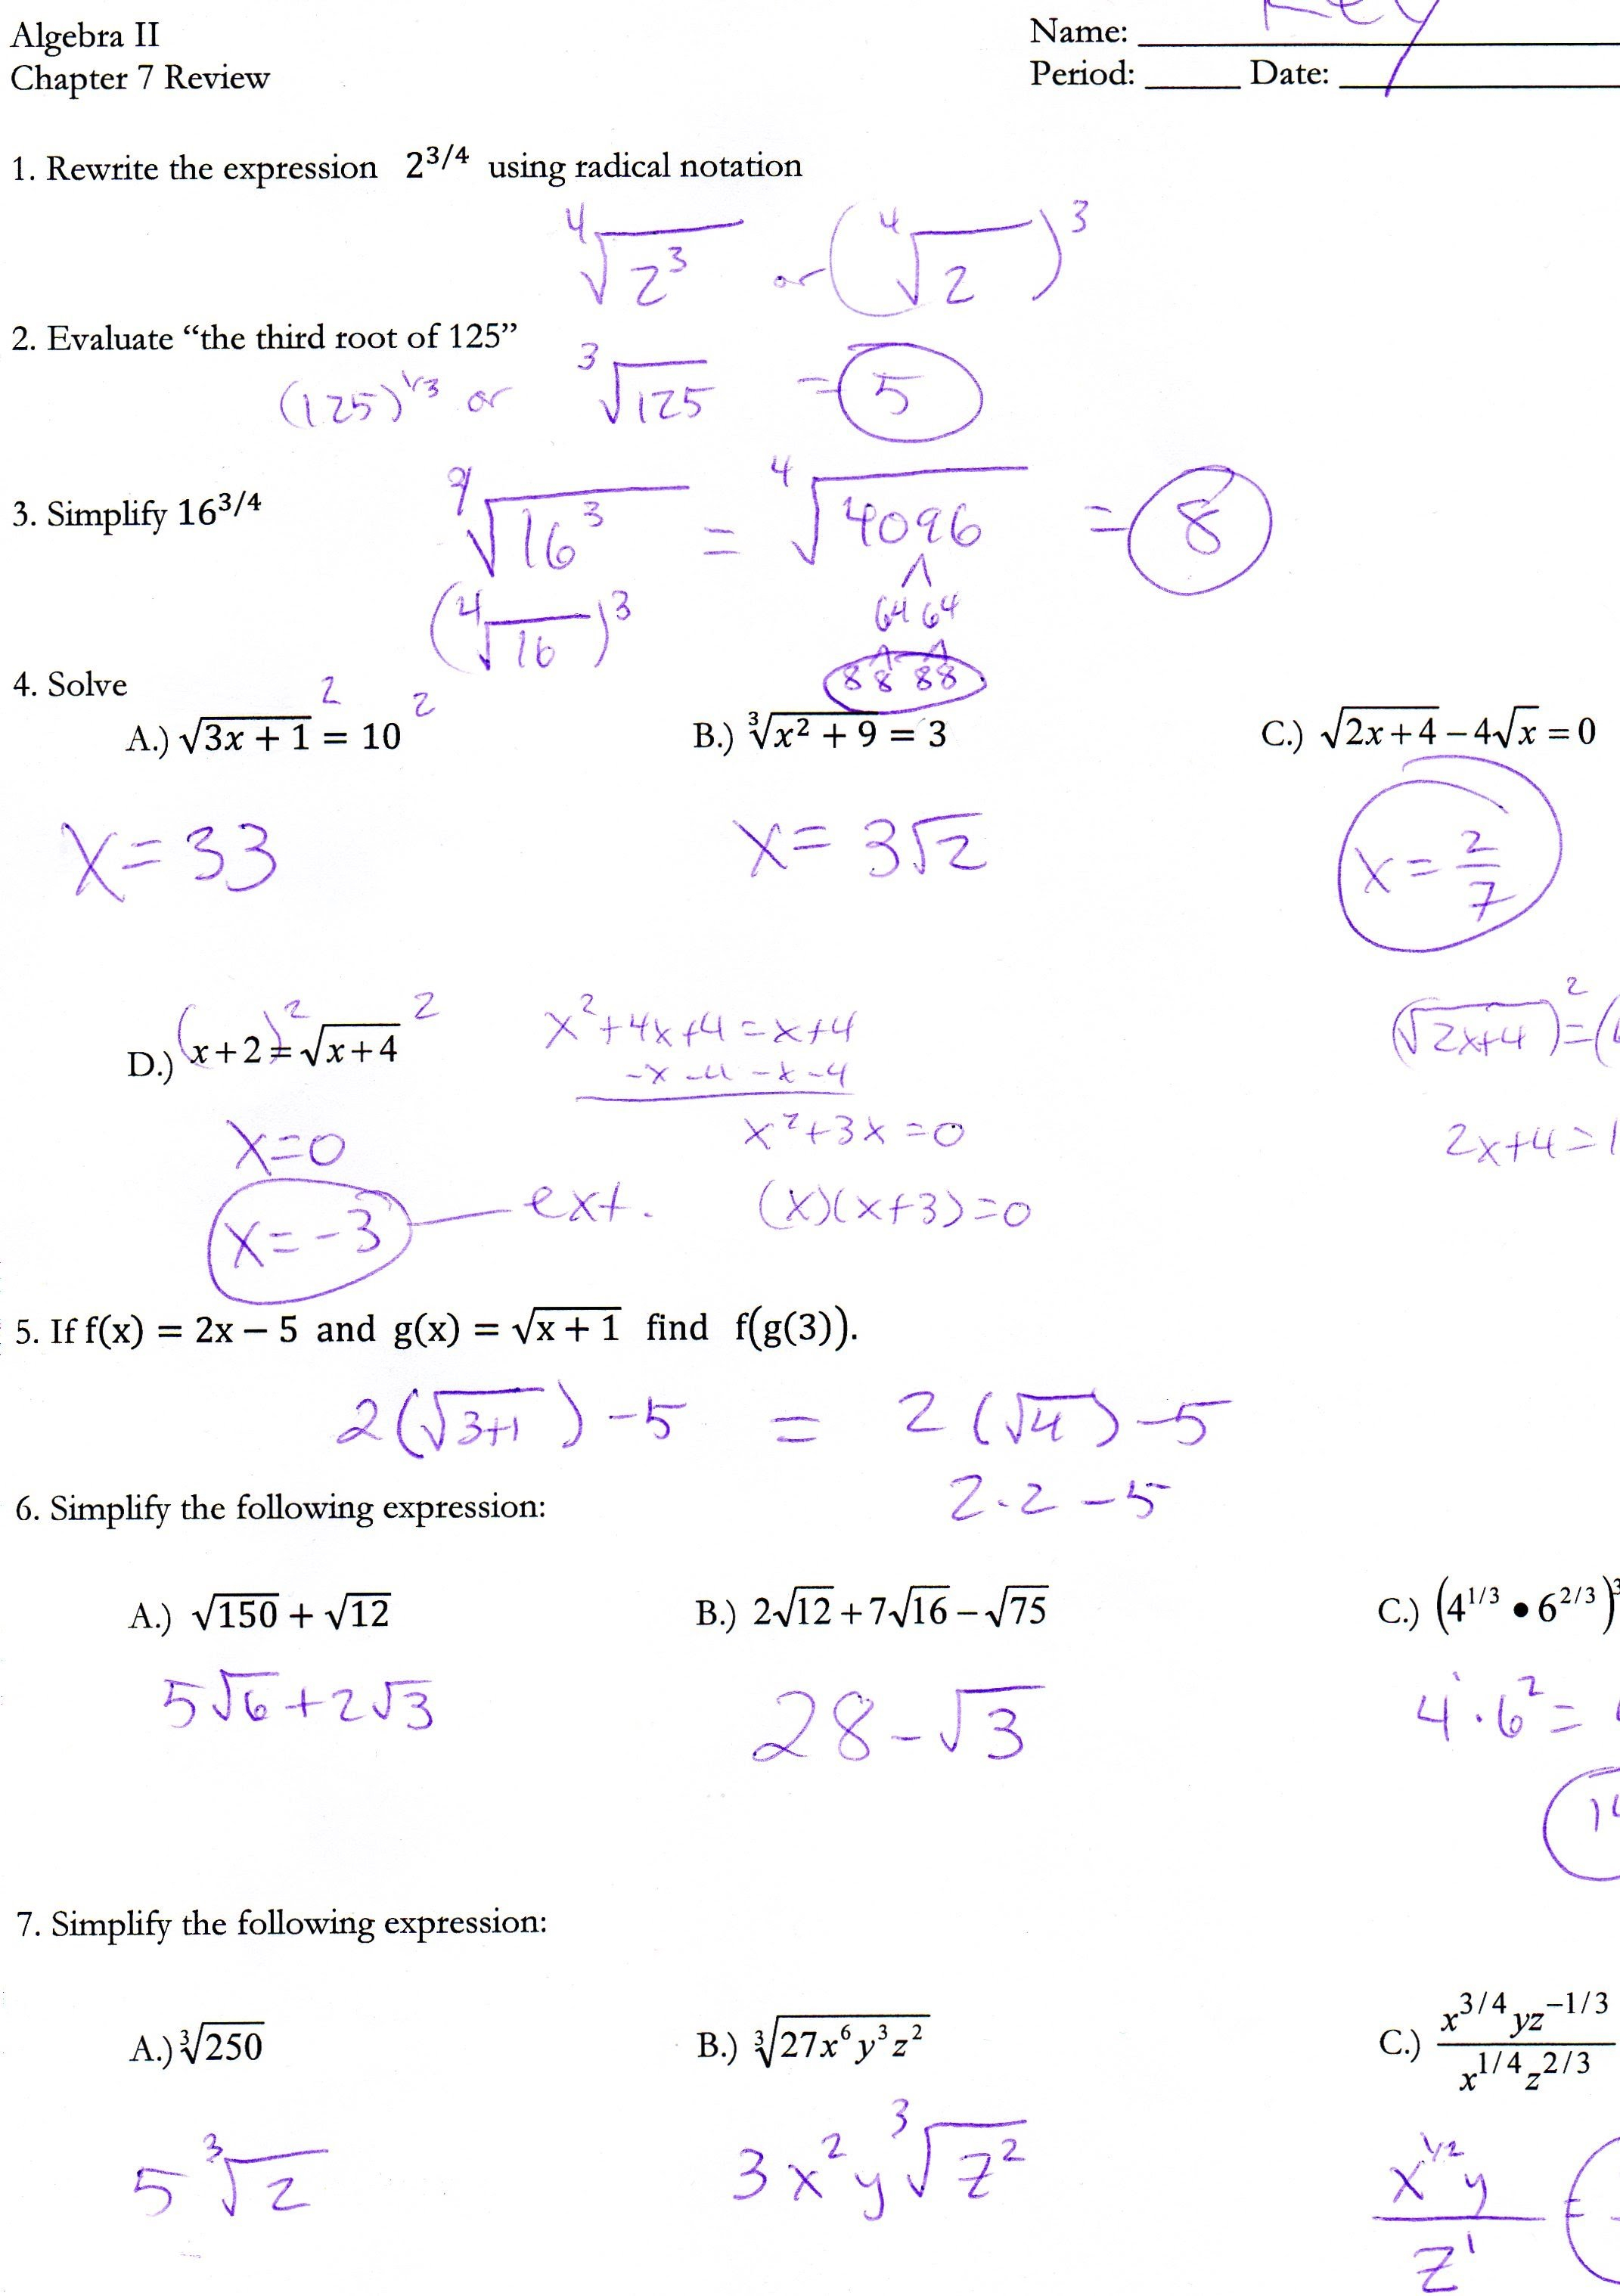 Algebra 2 Factoring Worksheet Key The Best Worksheets Image Together With Algebra 2 Factoring Worksheet Key